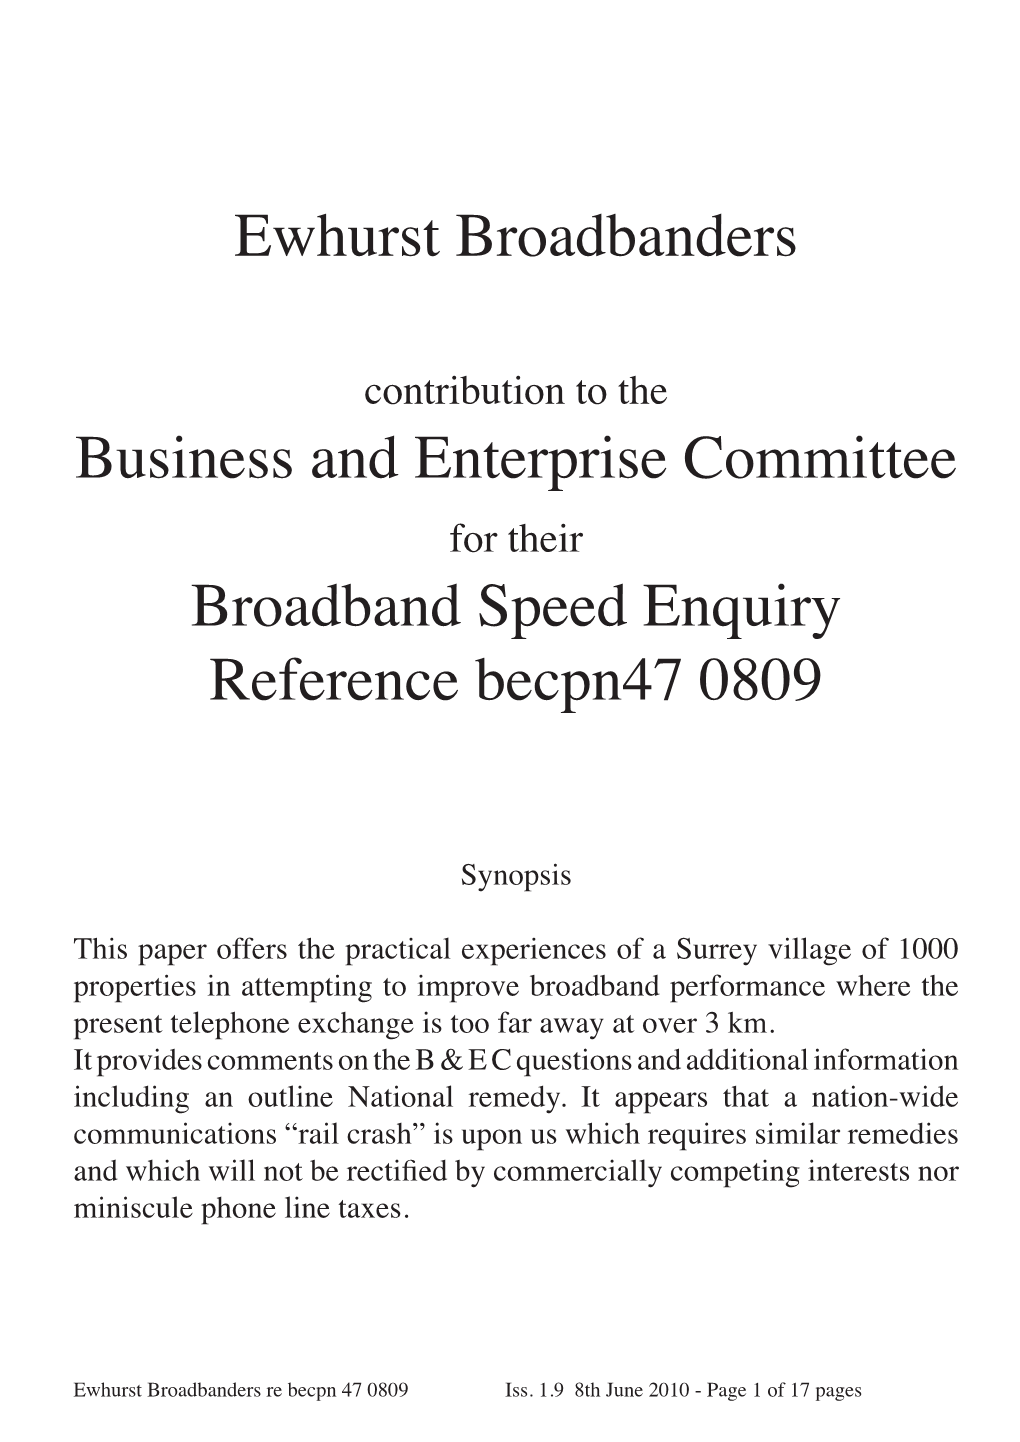 Ewhurst Broadbanders Business and Enterprise Committee Broadband